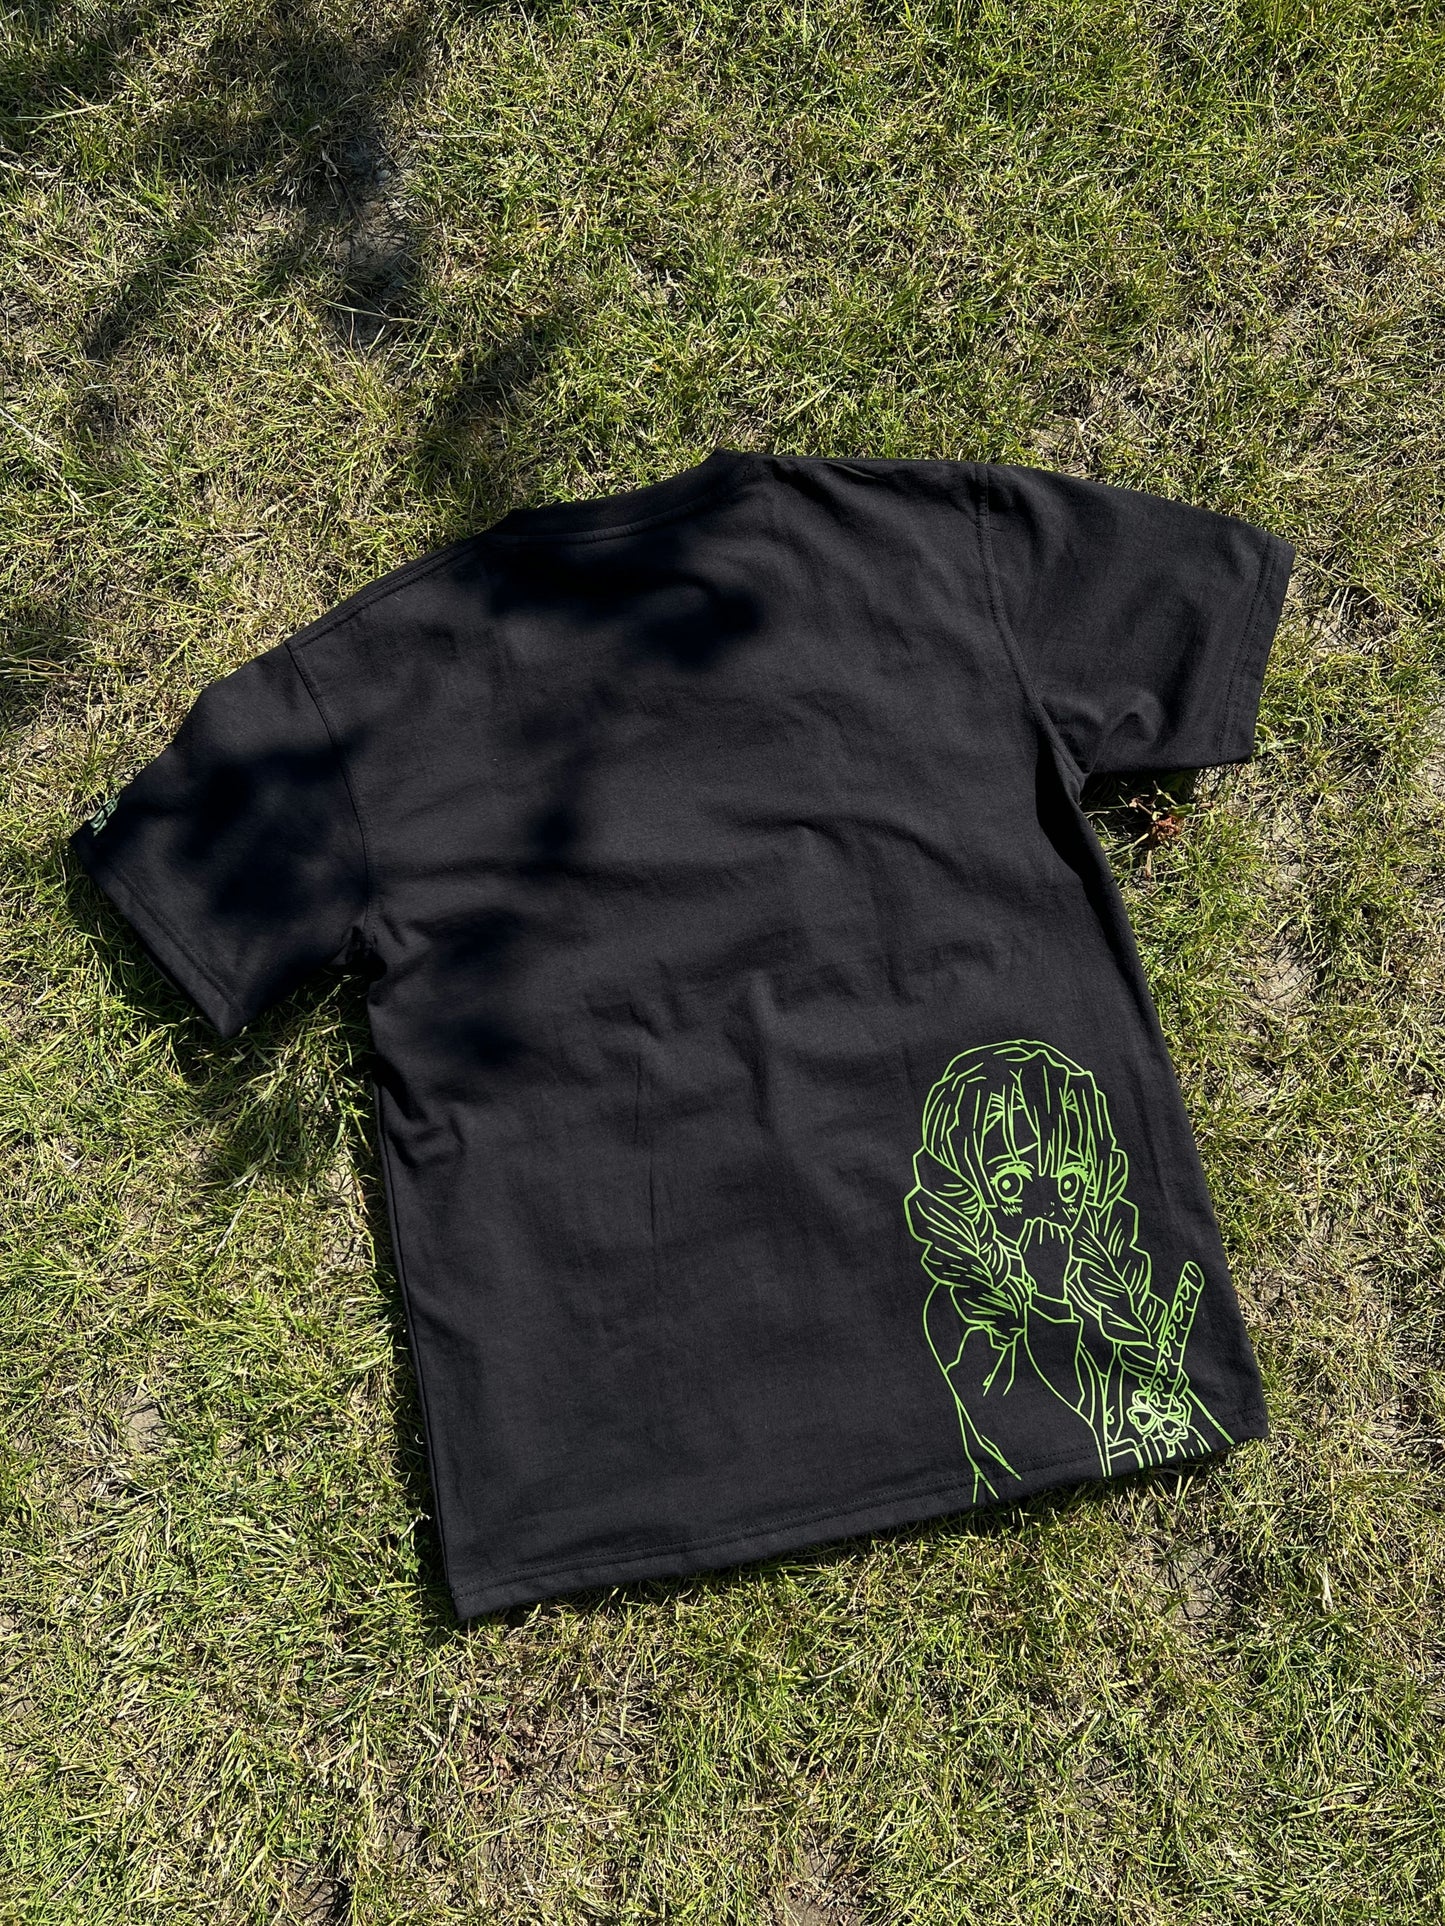 Mitsuri Kanroji Black T-Shirt (Pre-Order)